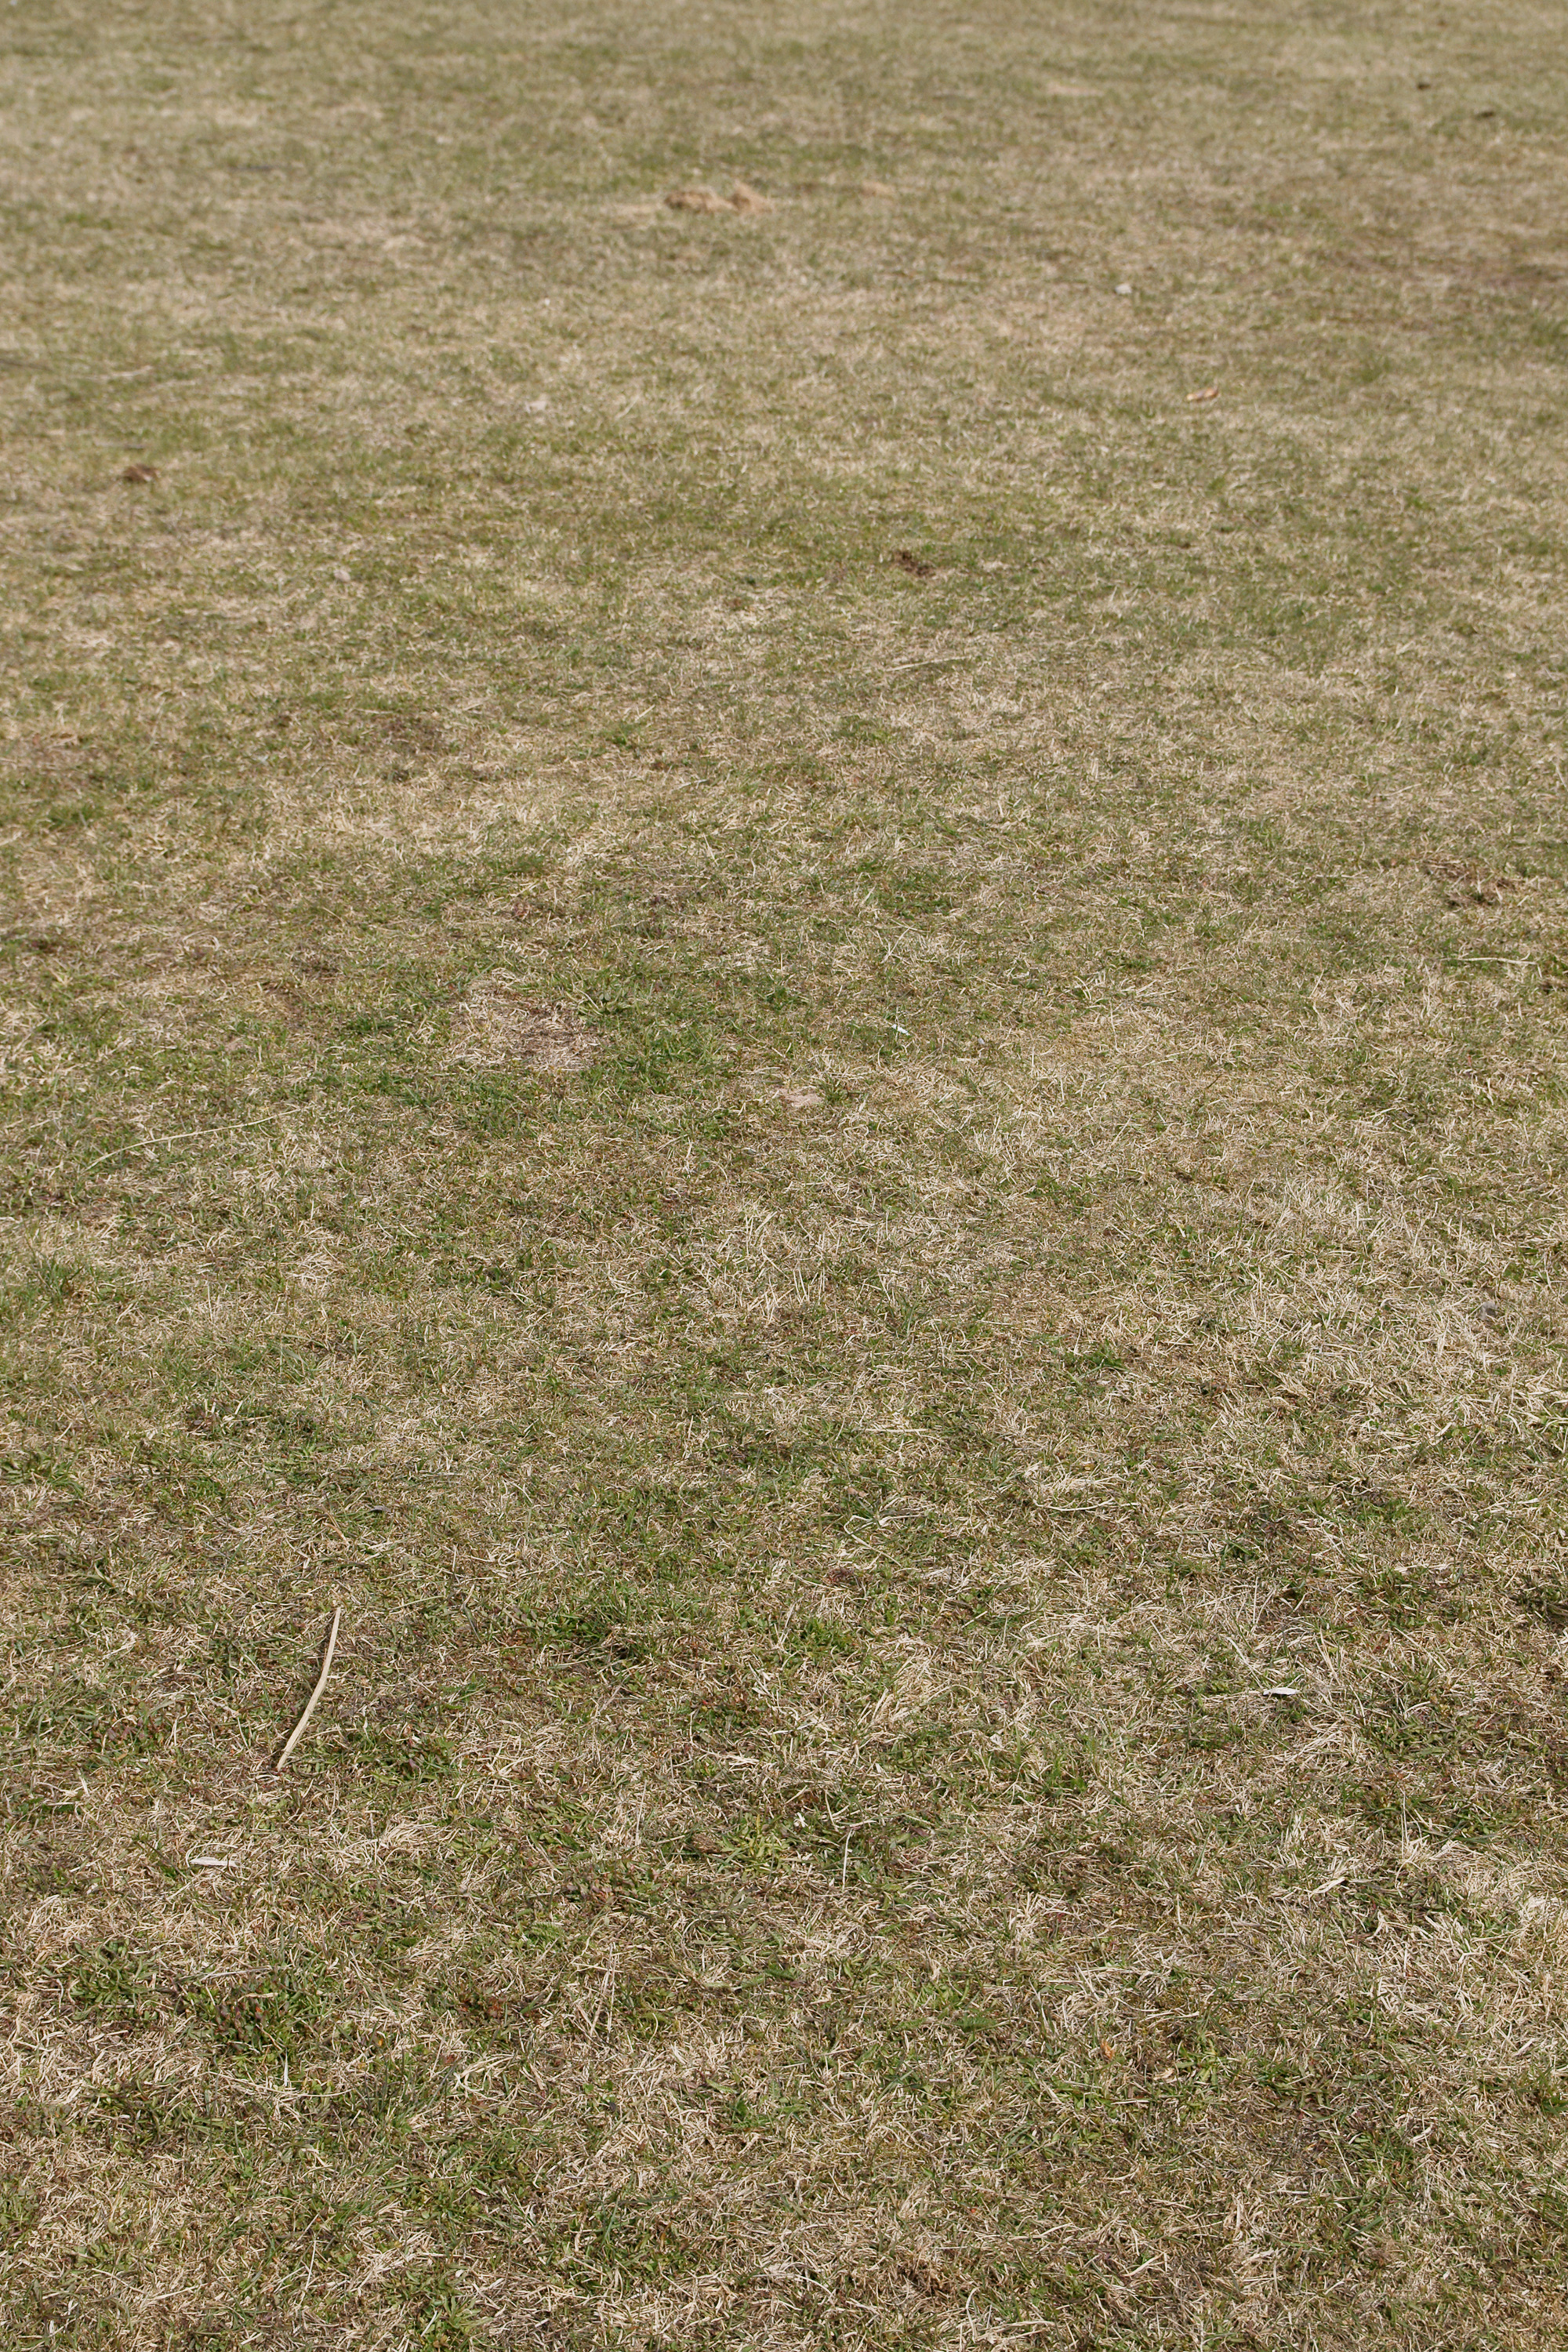 File:Dry lawn.jpg - Wikimedia Commons